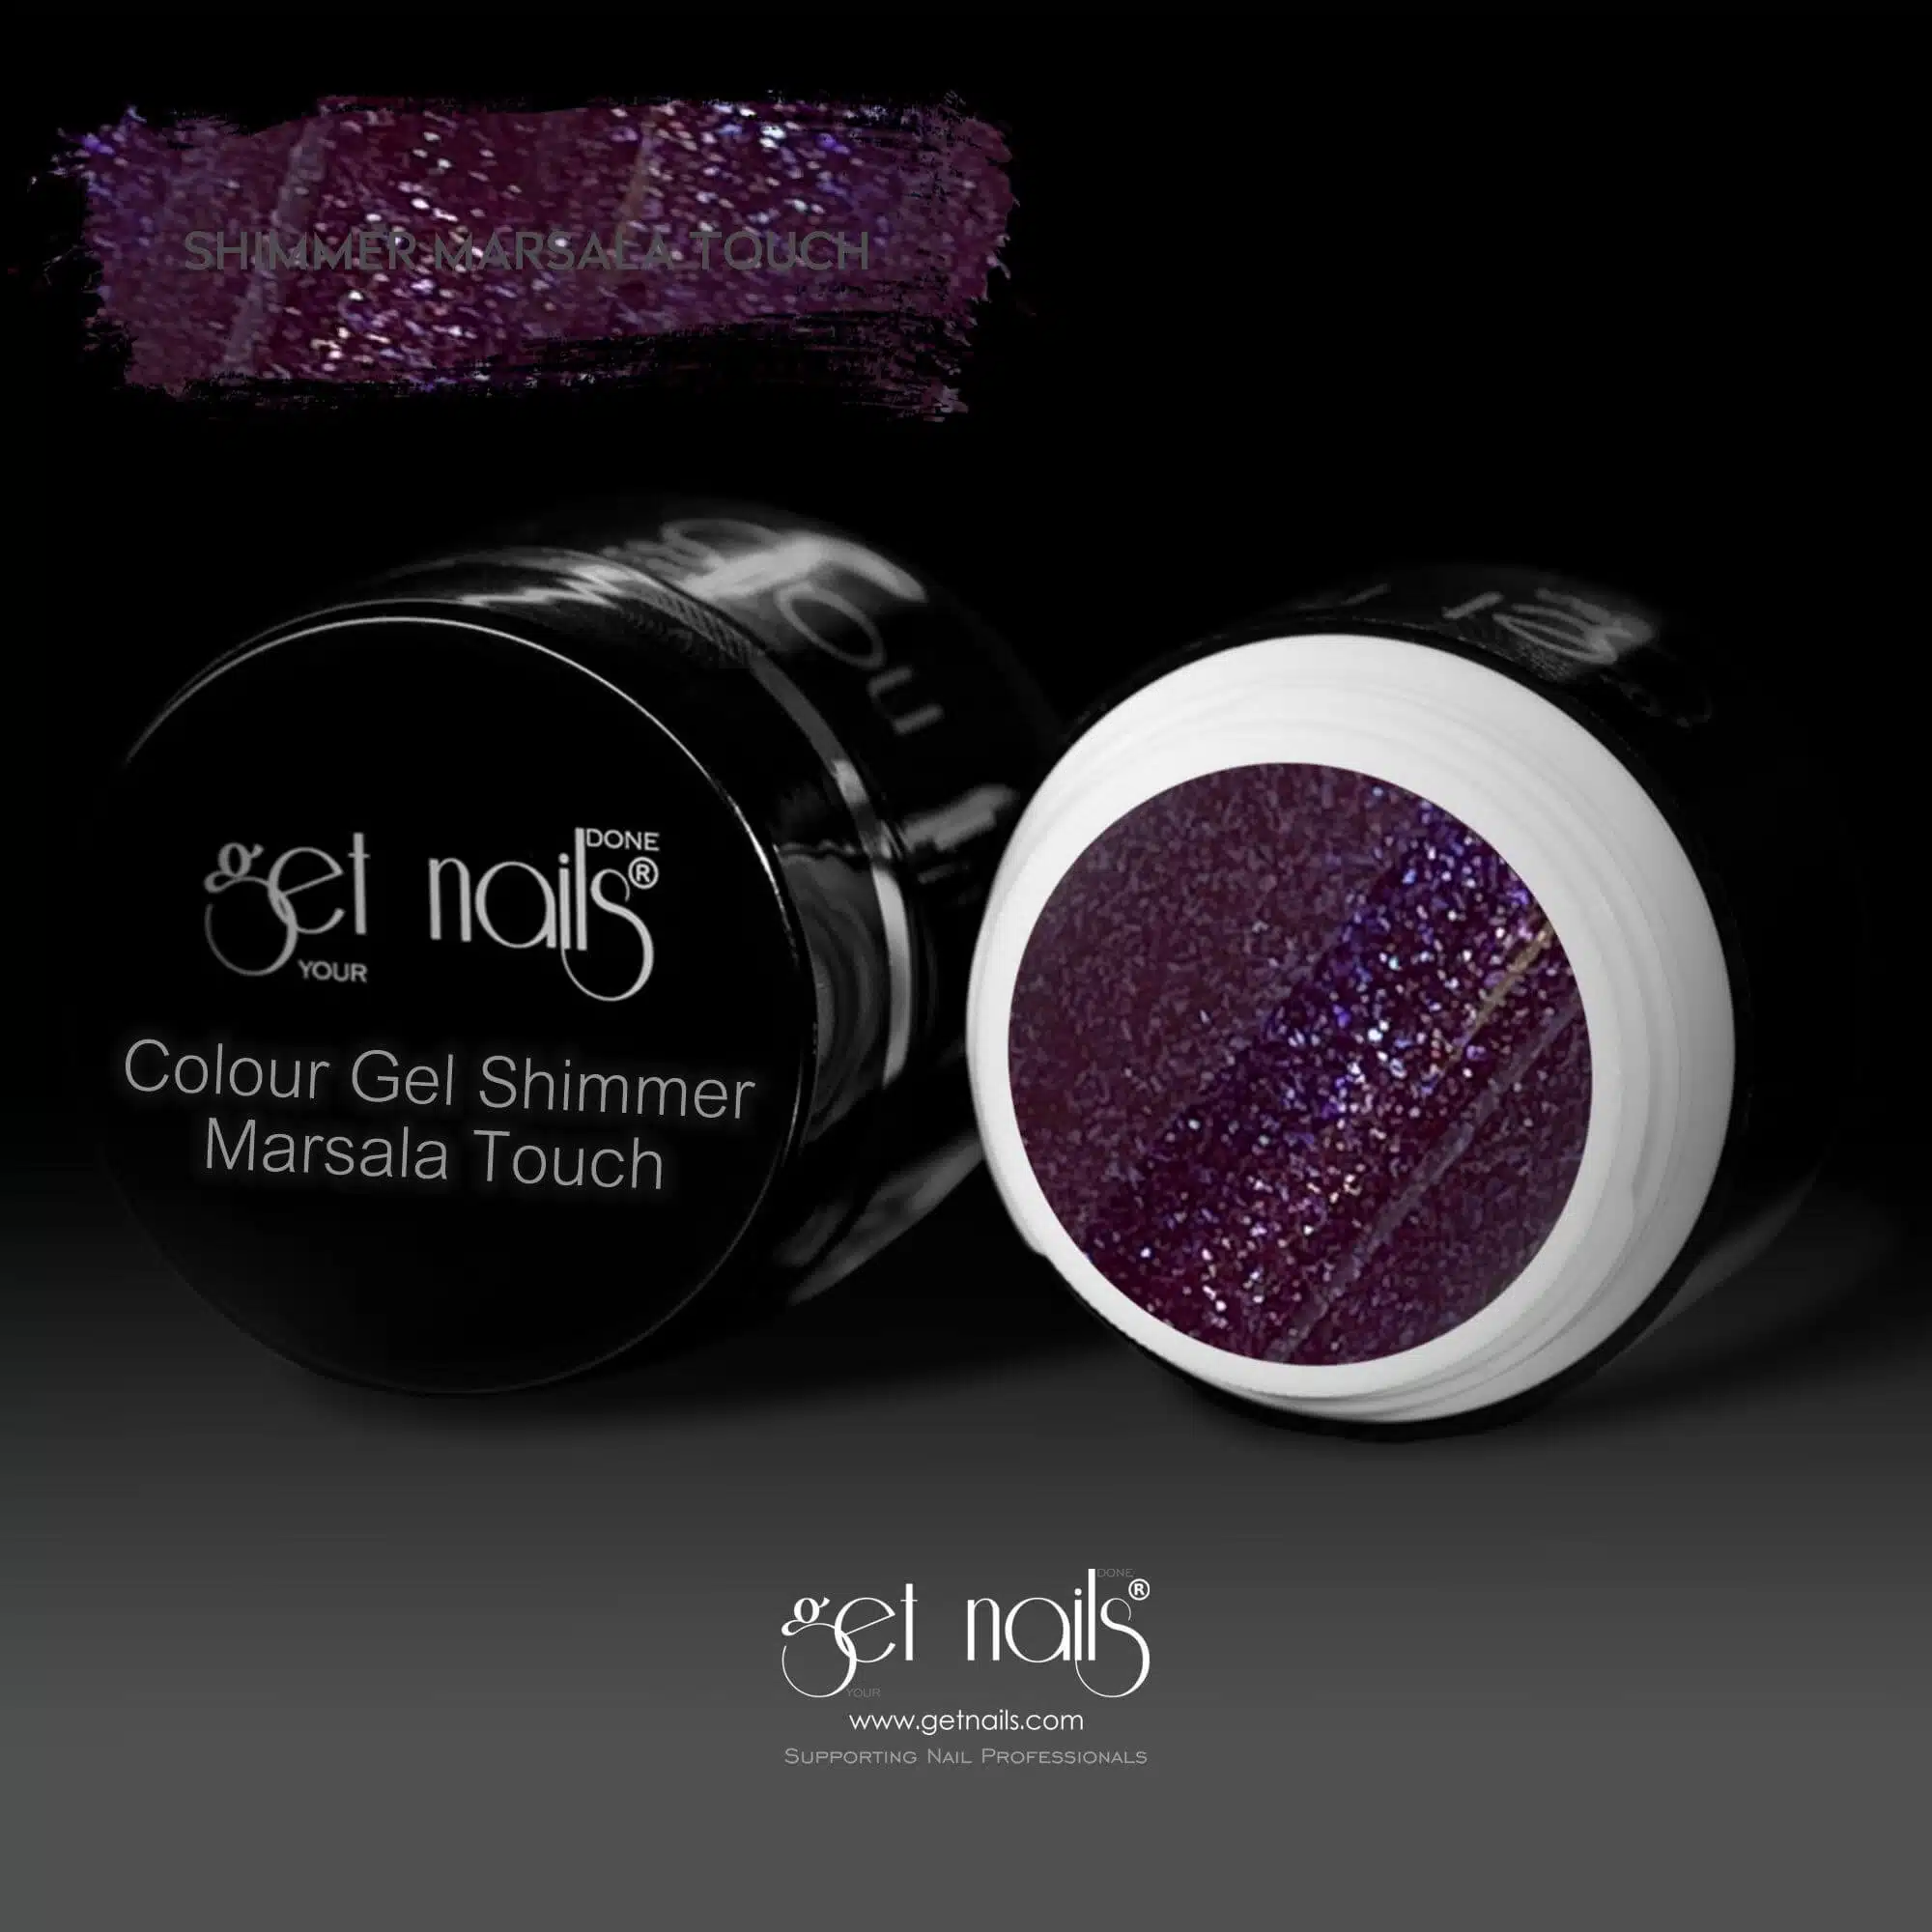 Get Nails Austria - Colour Gel Shimmer Marsala Touch 5g